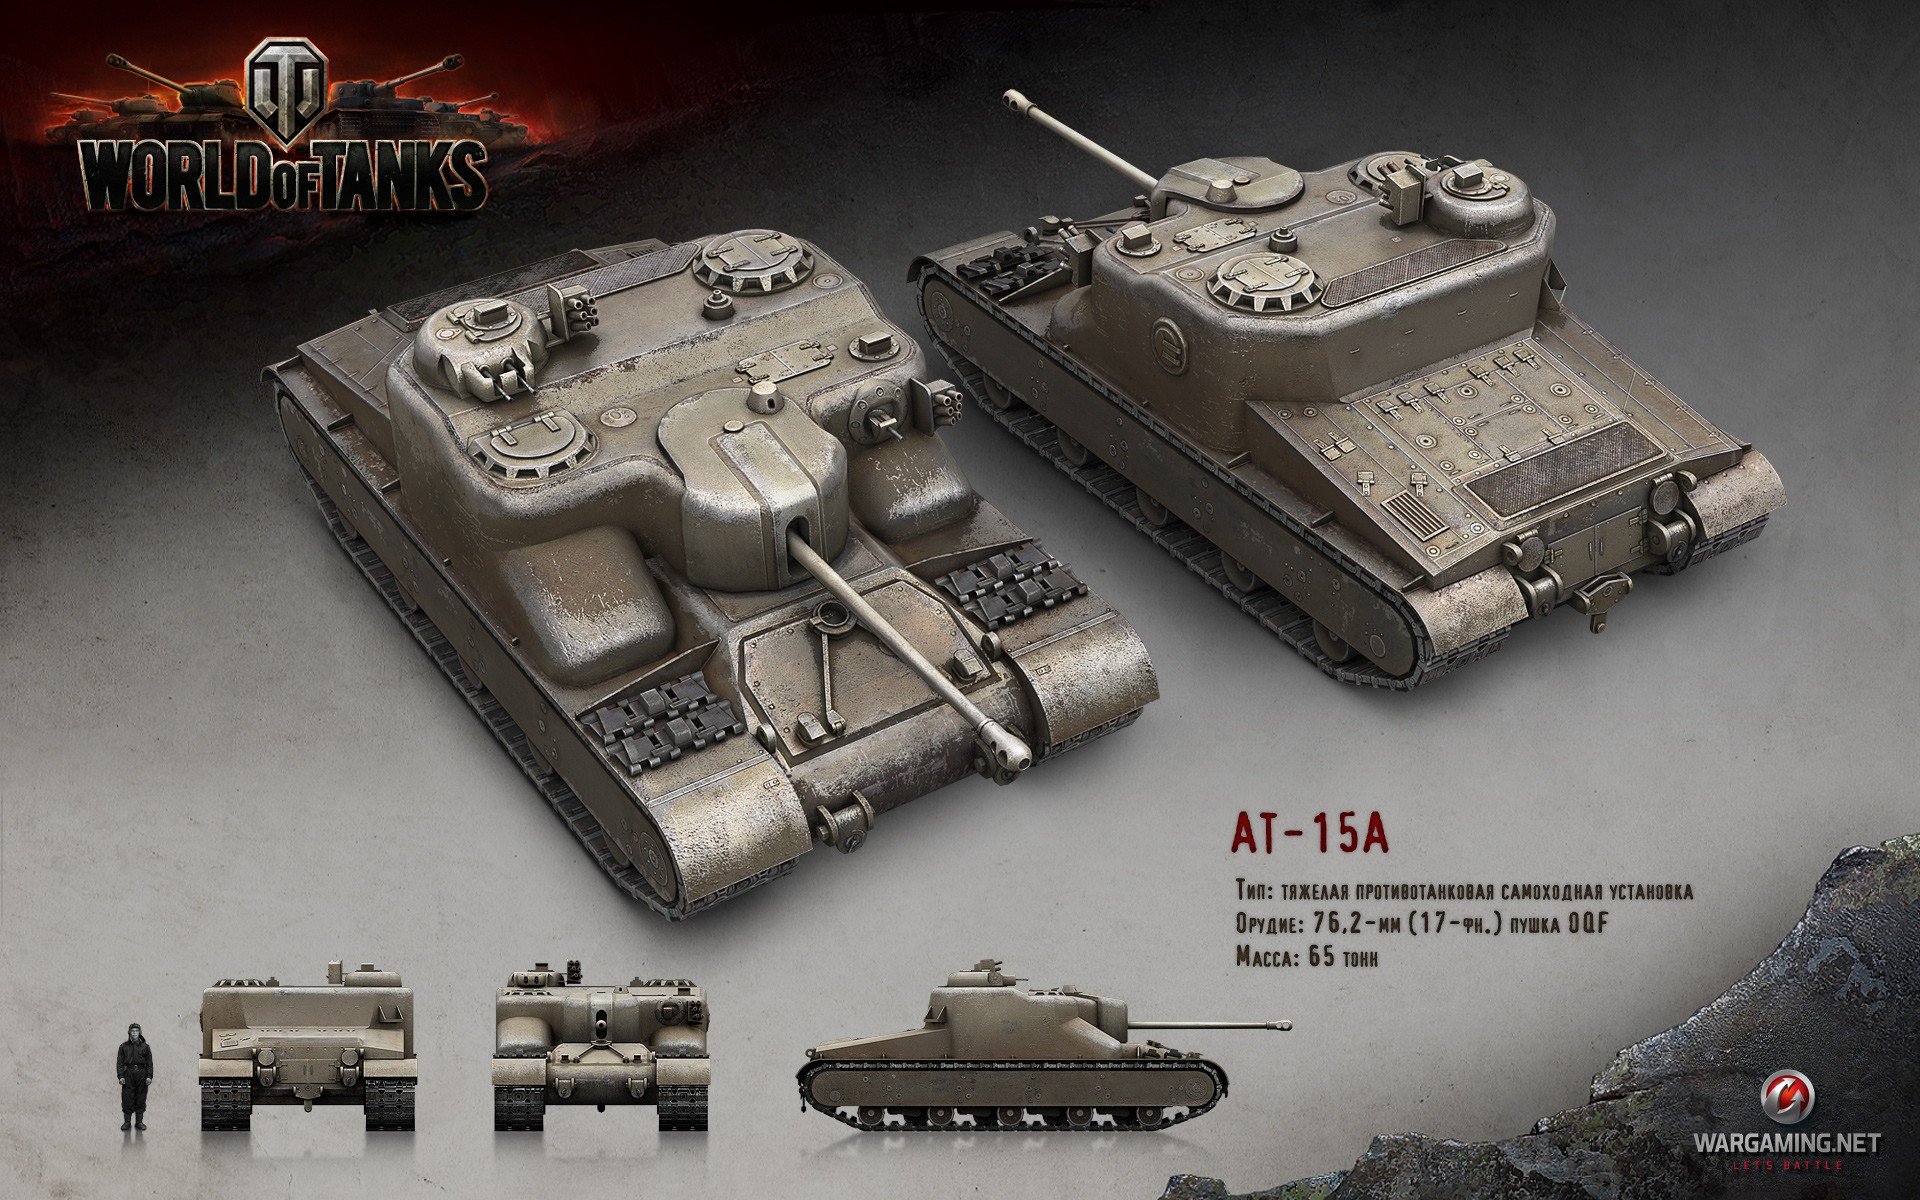 World of Tanks, Tank, Wargaming, AT 15 Wallpaper